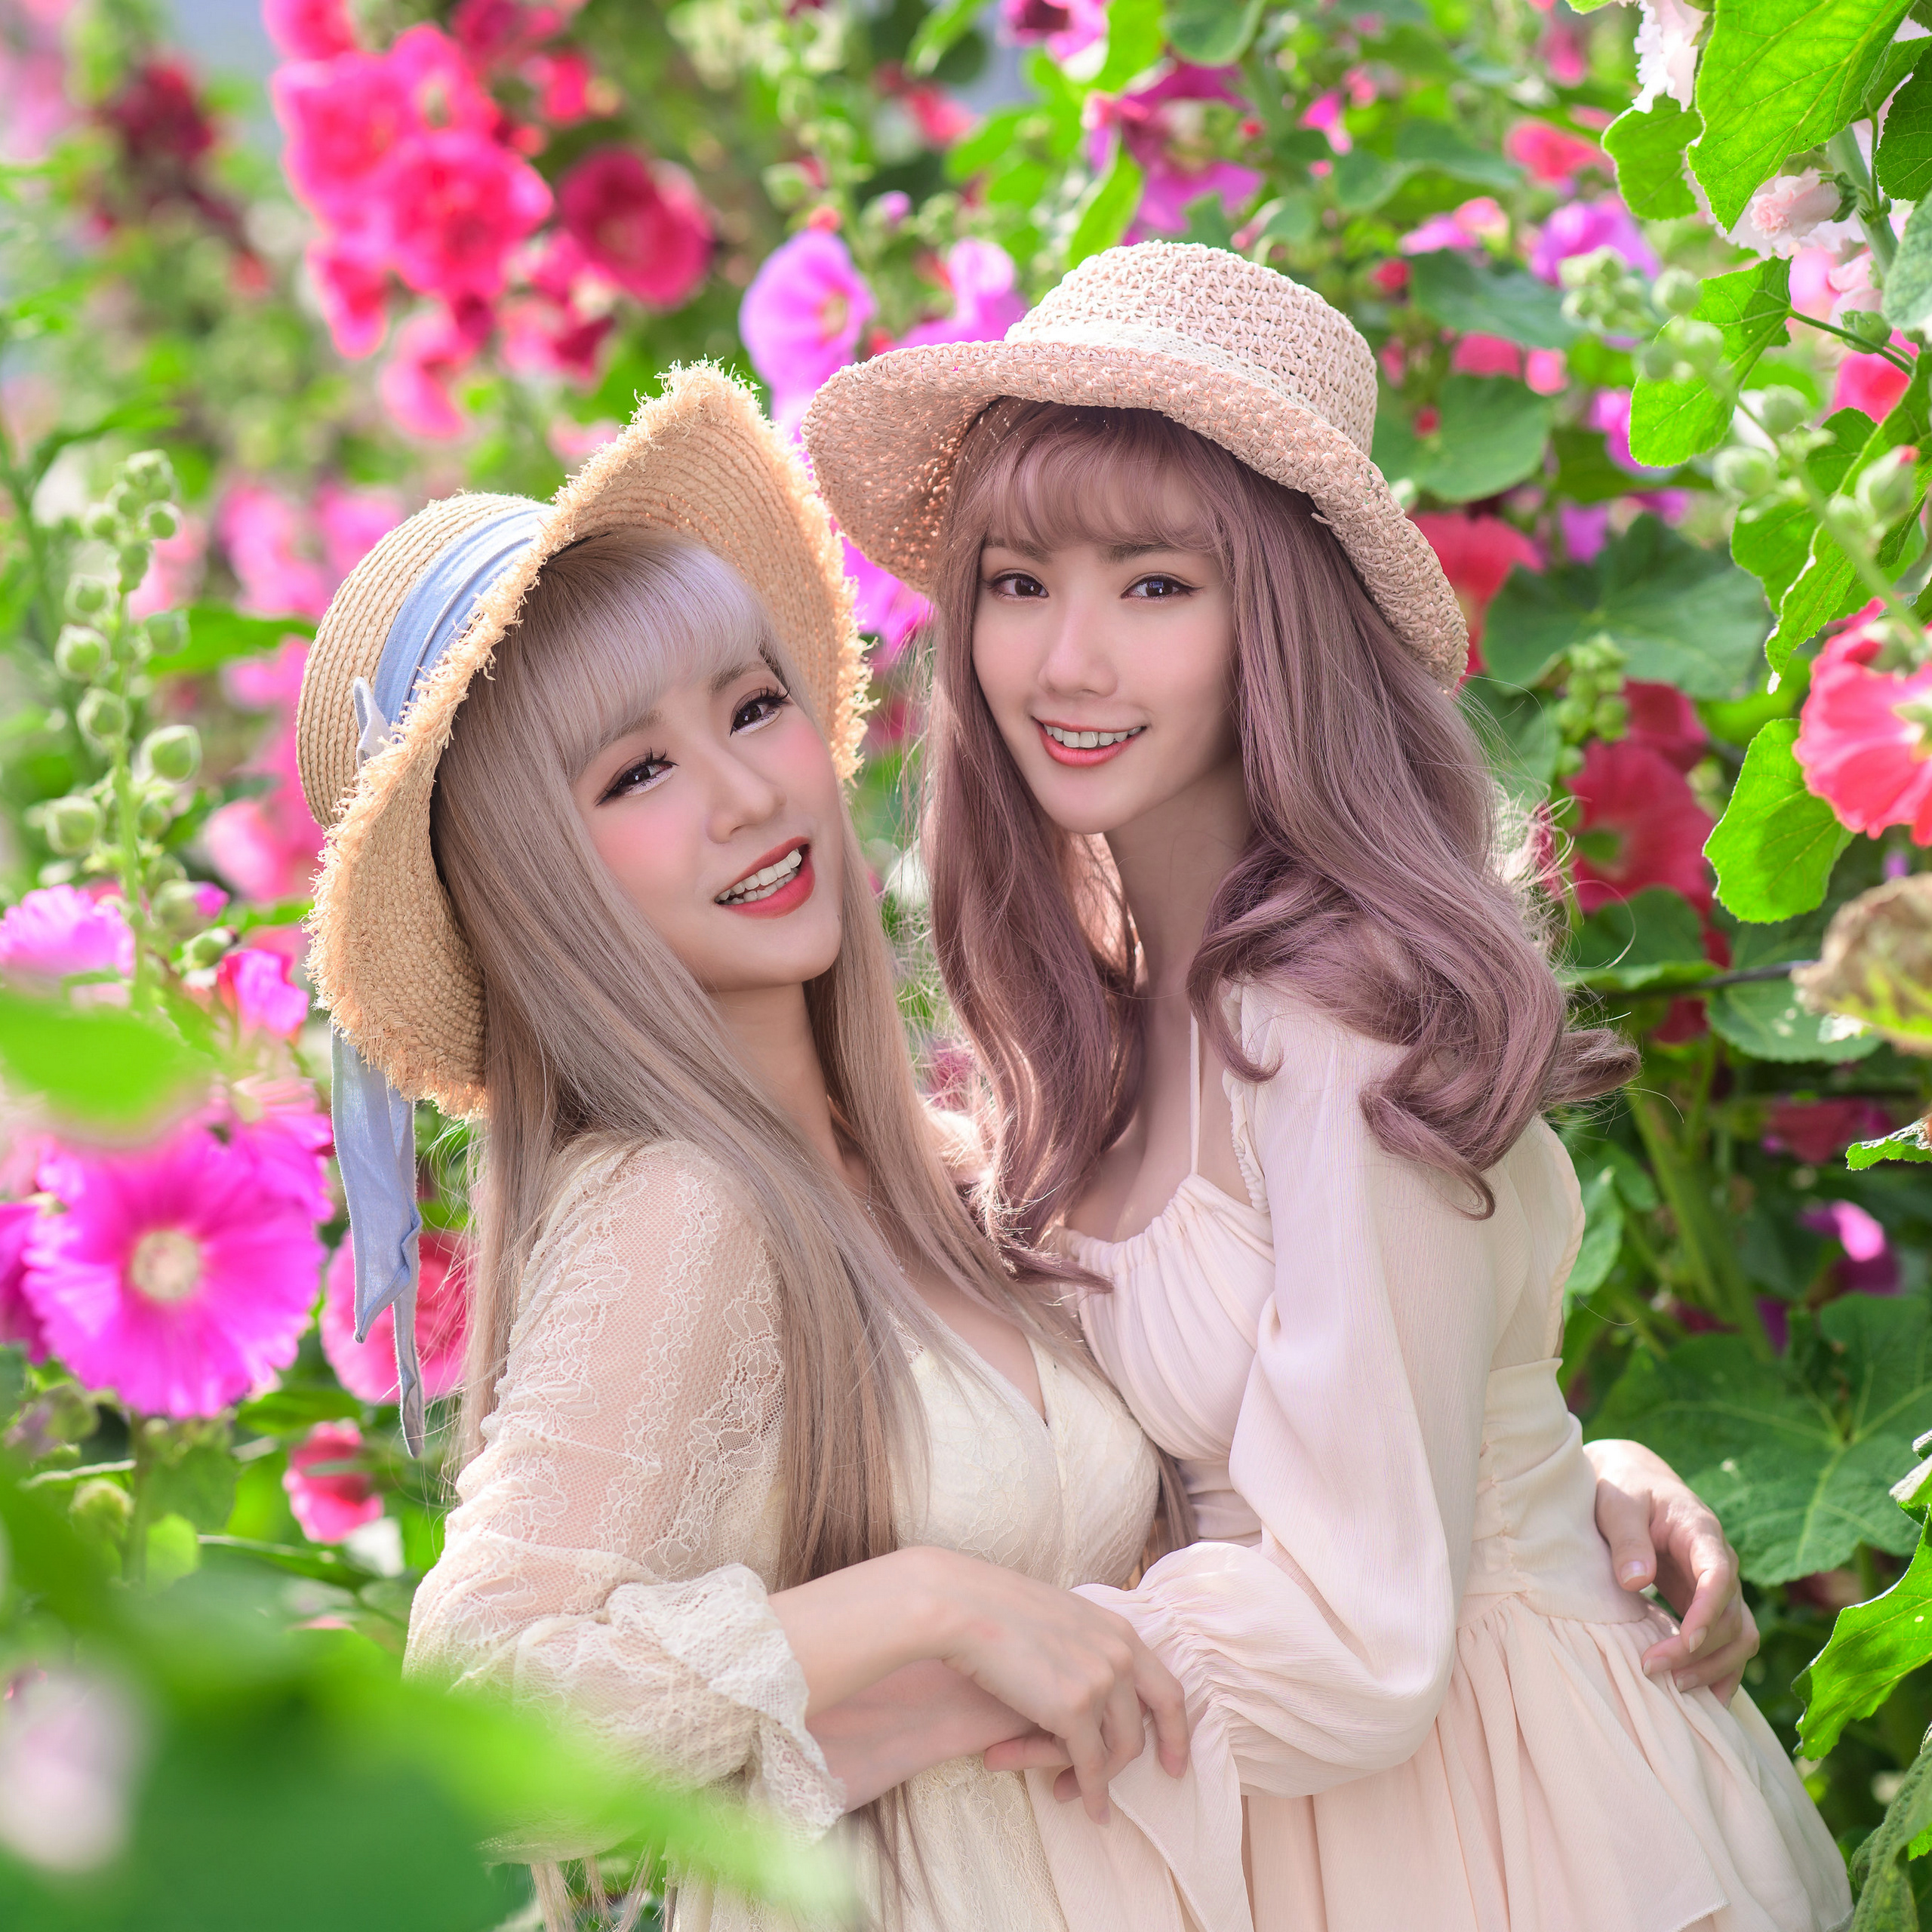 People 2560x2560 Asian model women long hair dyed hair straw hat two women women outdoors flowers dress hugging looking at viewer depth of field field